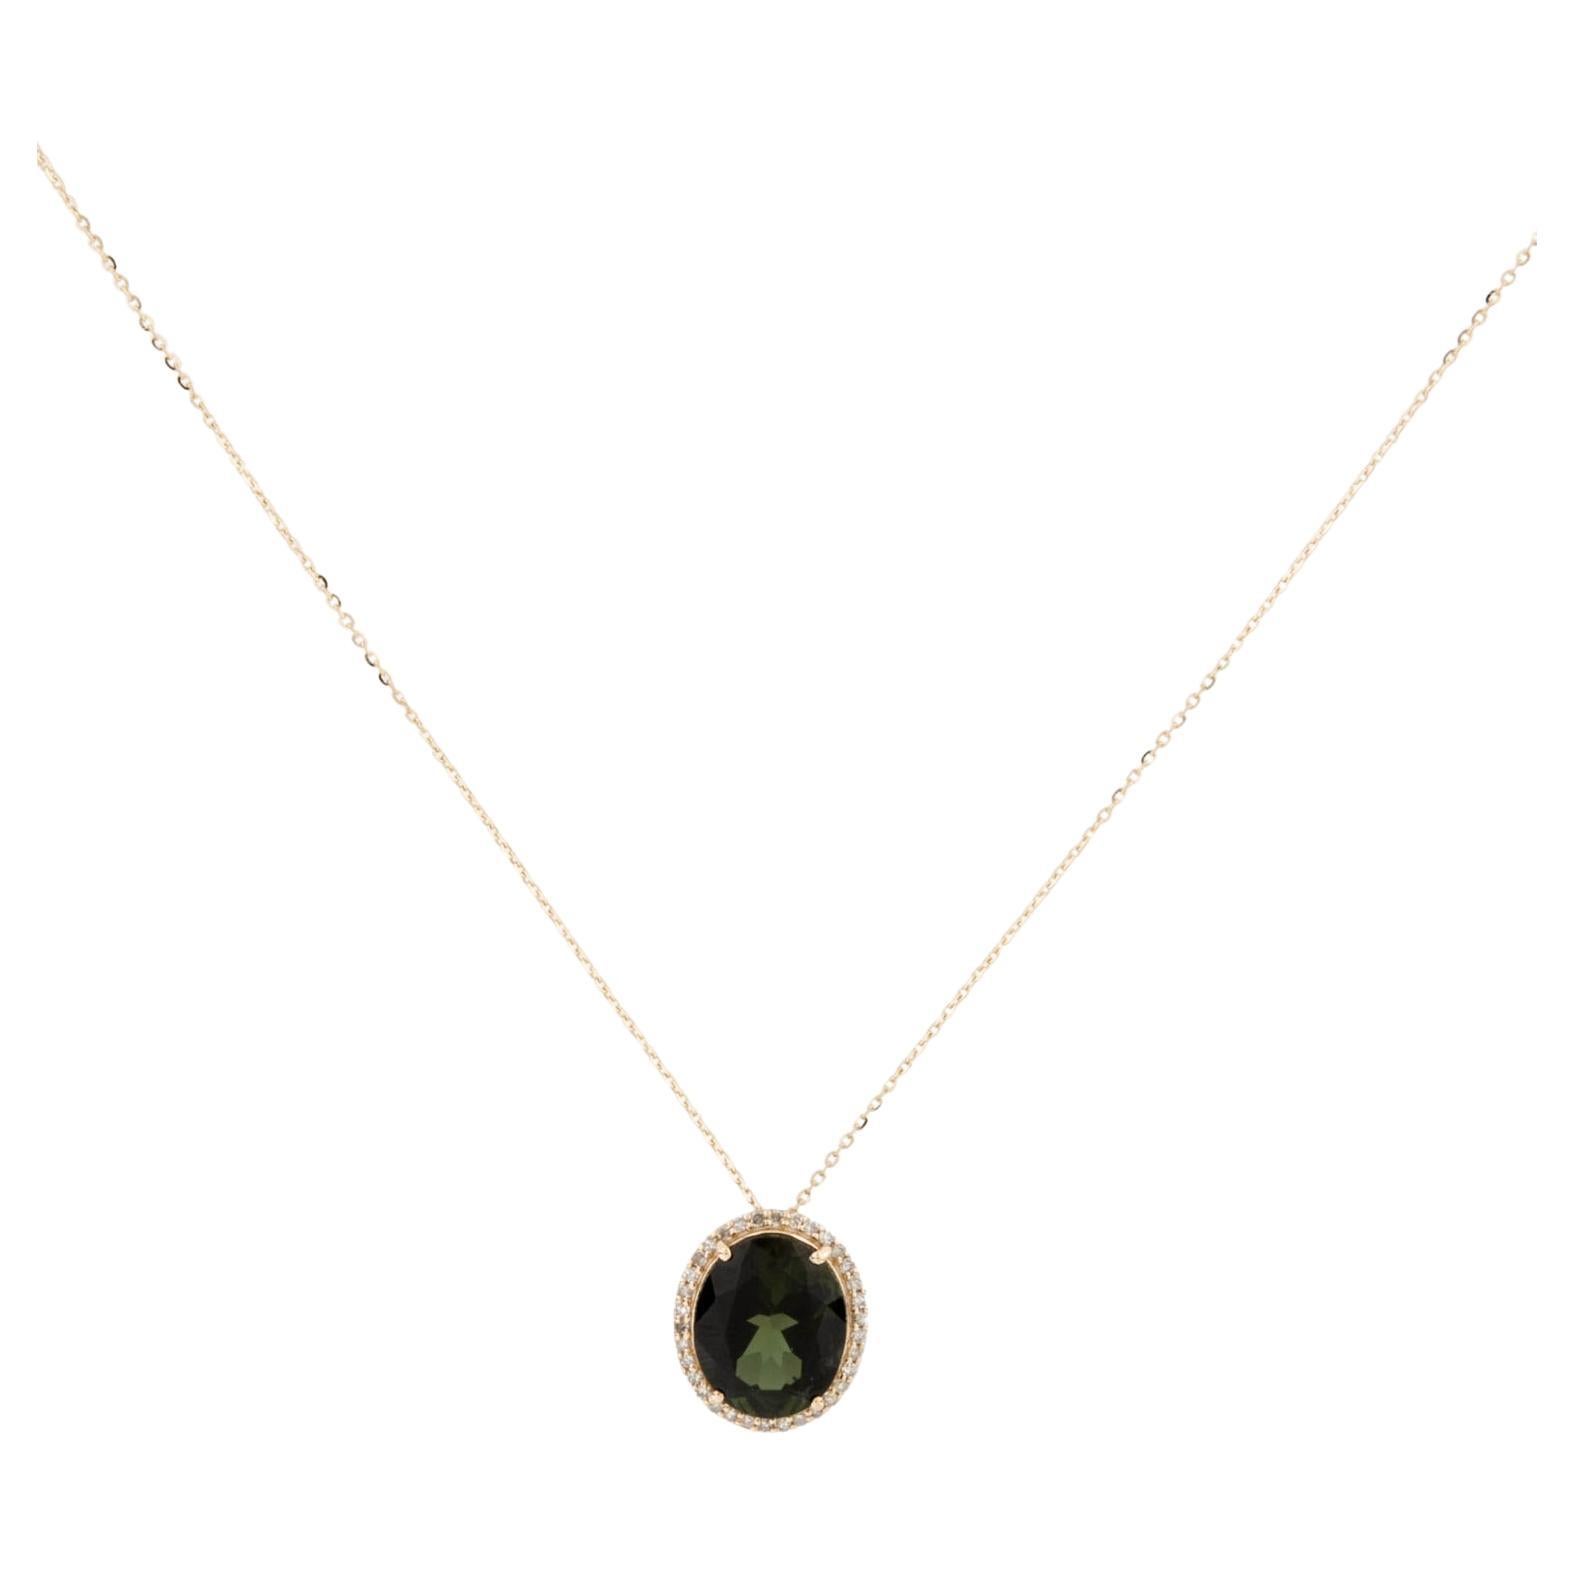 14K Tourmaline & Diamond Pendant Necklace - Exquisite Gemstone Jewelry Statement For Sale